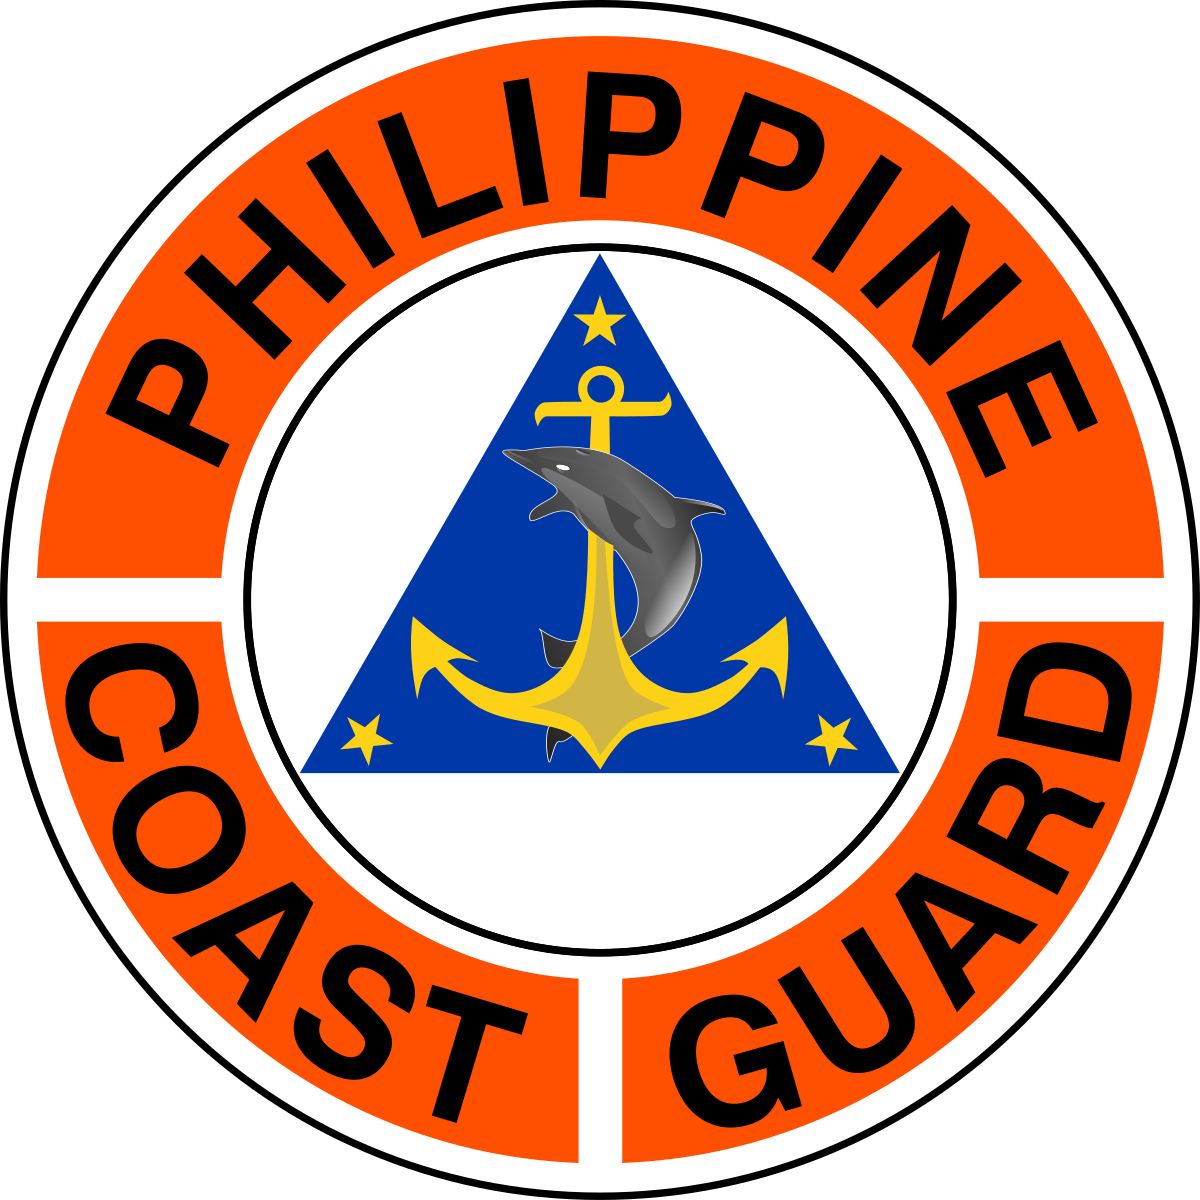 Navy clipart uniform coast guard. Group philippine wikipedia